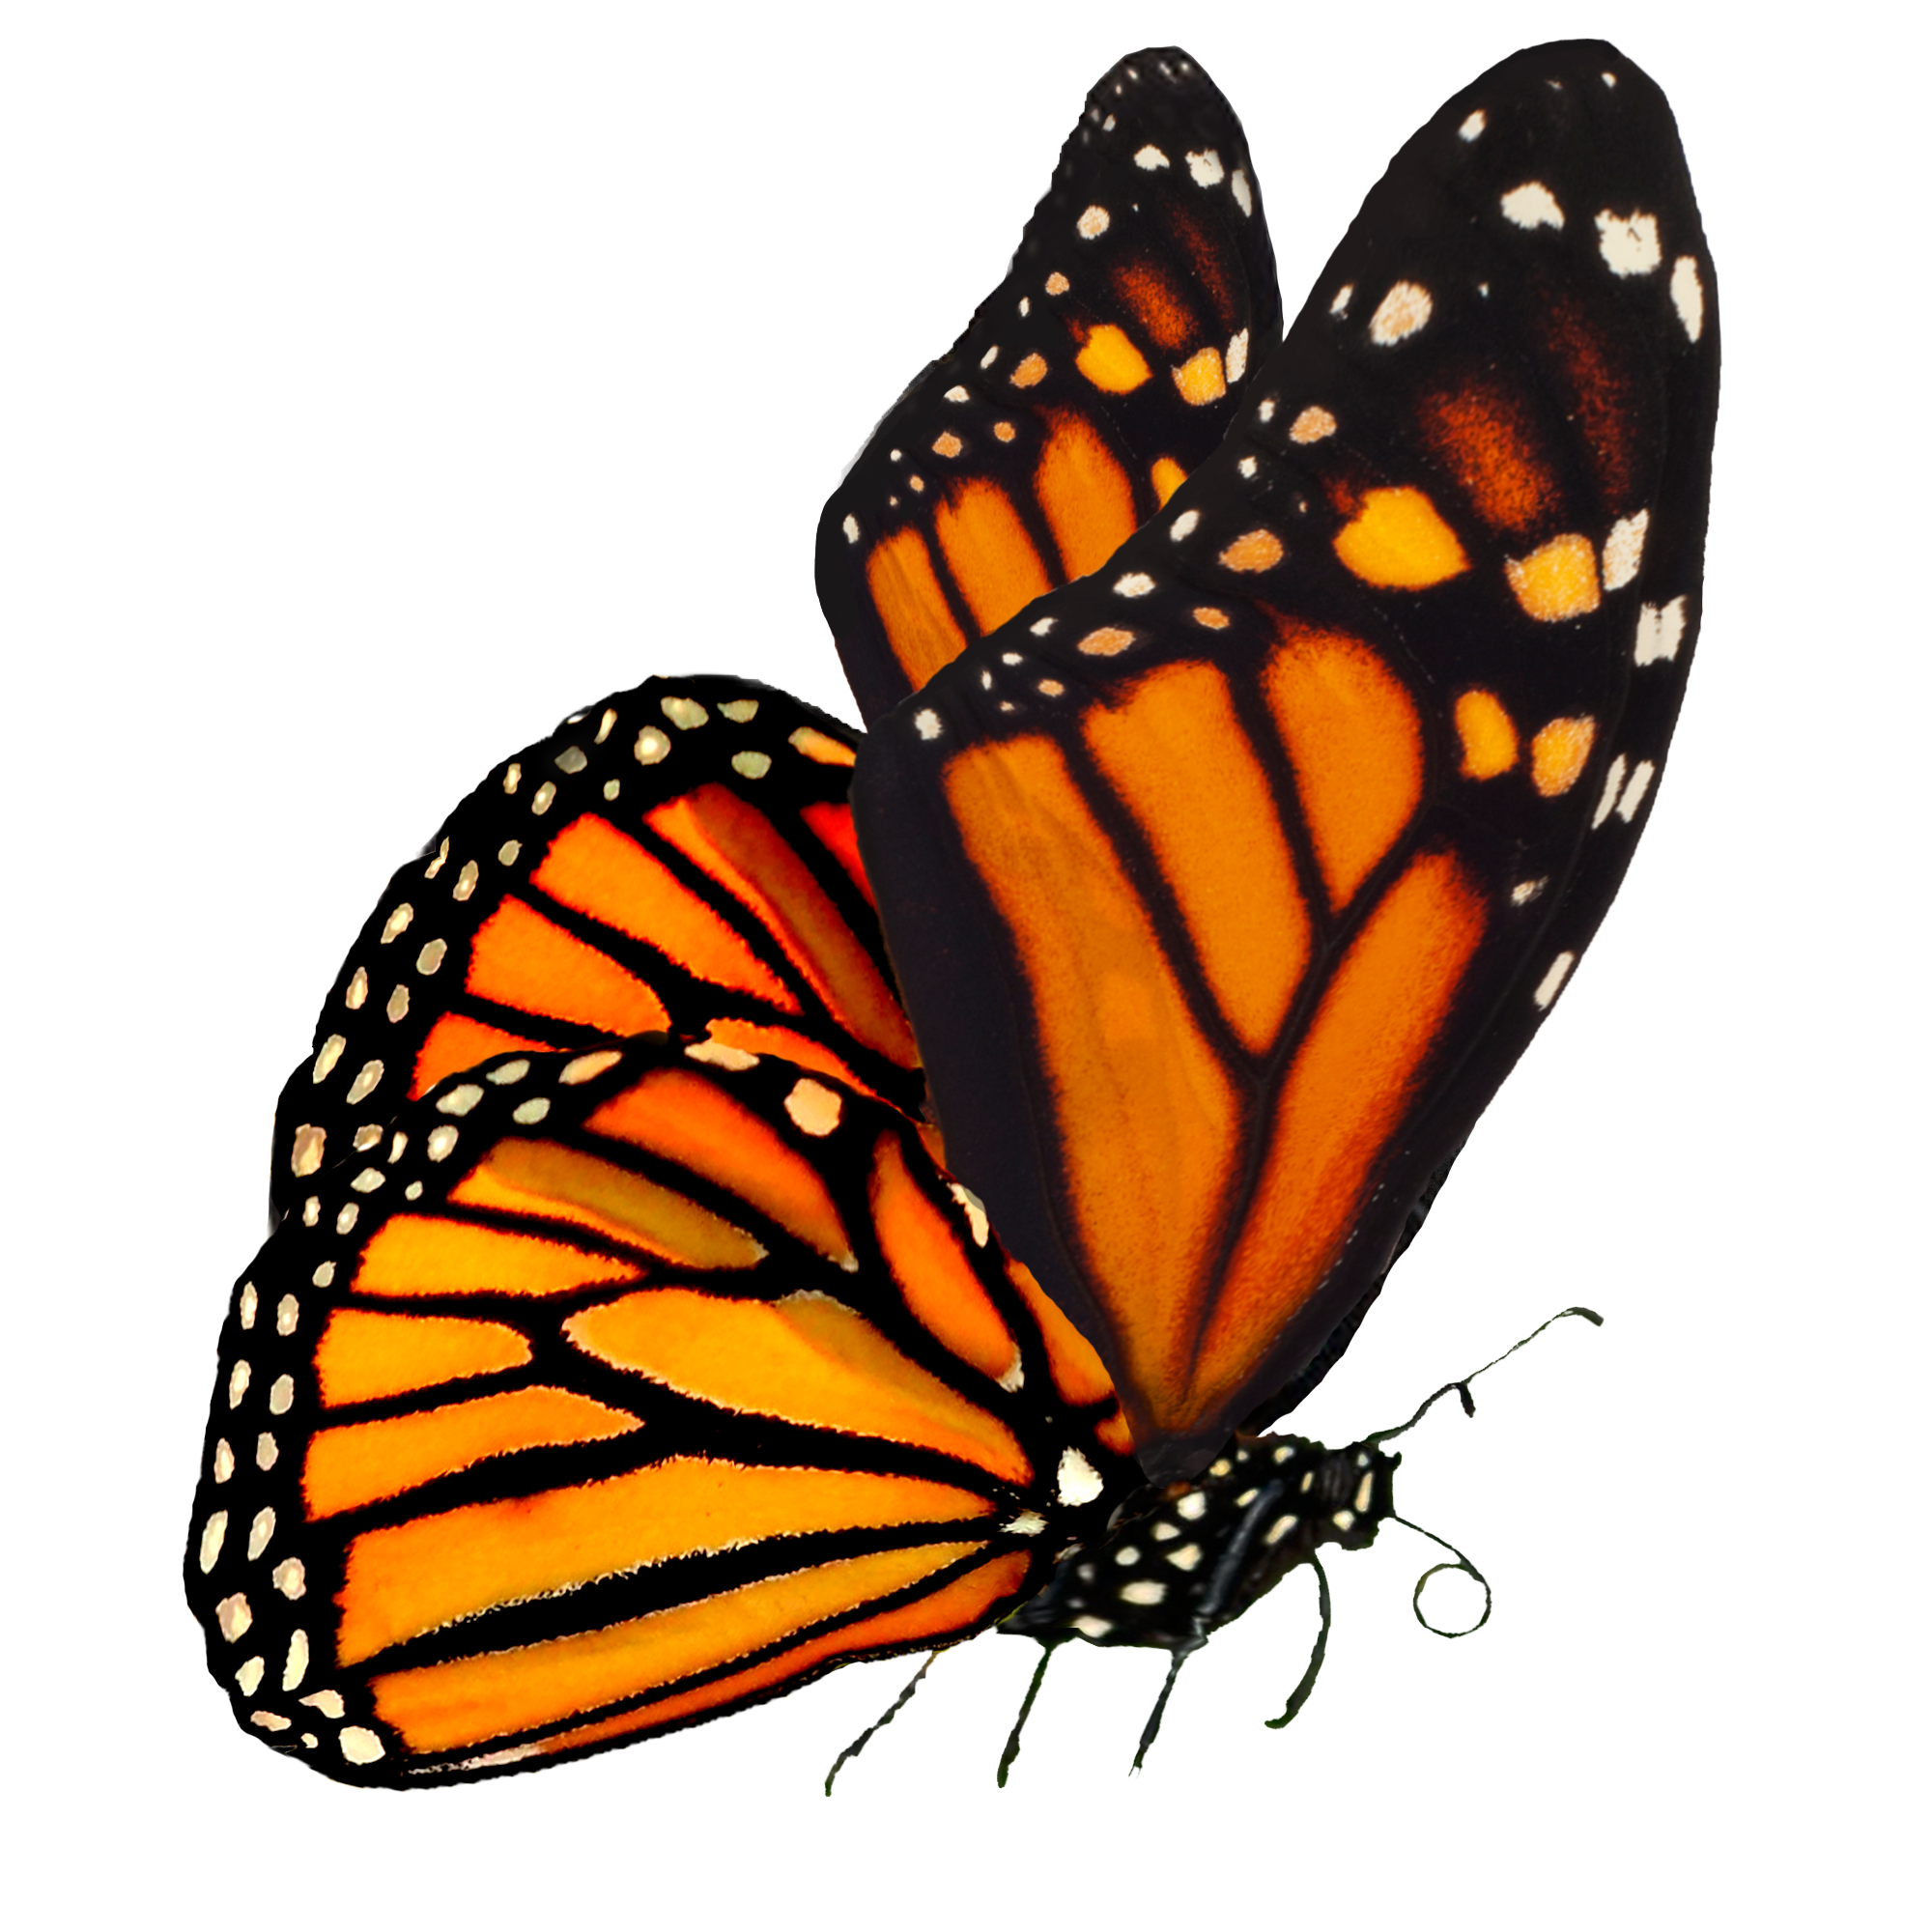 Бабочка Монарх. Данаида Монарх бабочка рисунок. Бабочки на просроченном фоне. Бабочки на белом фоне.